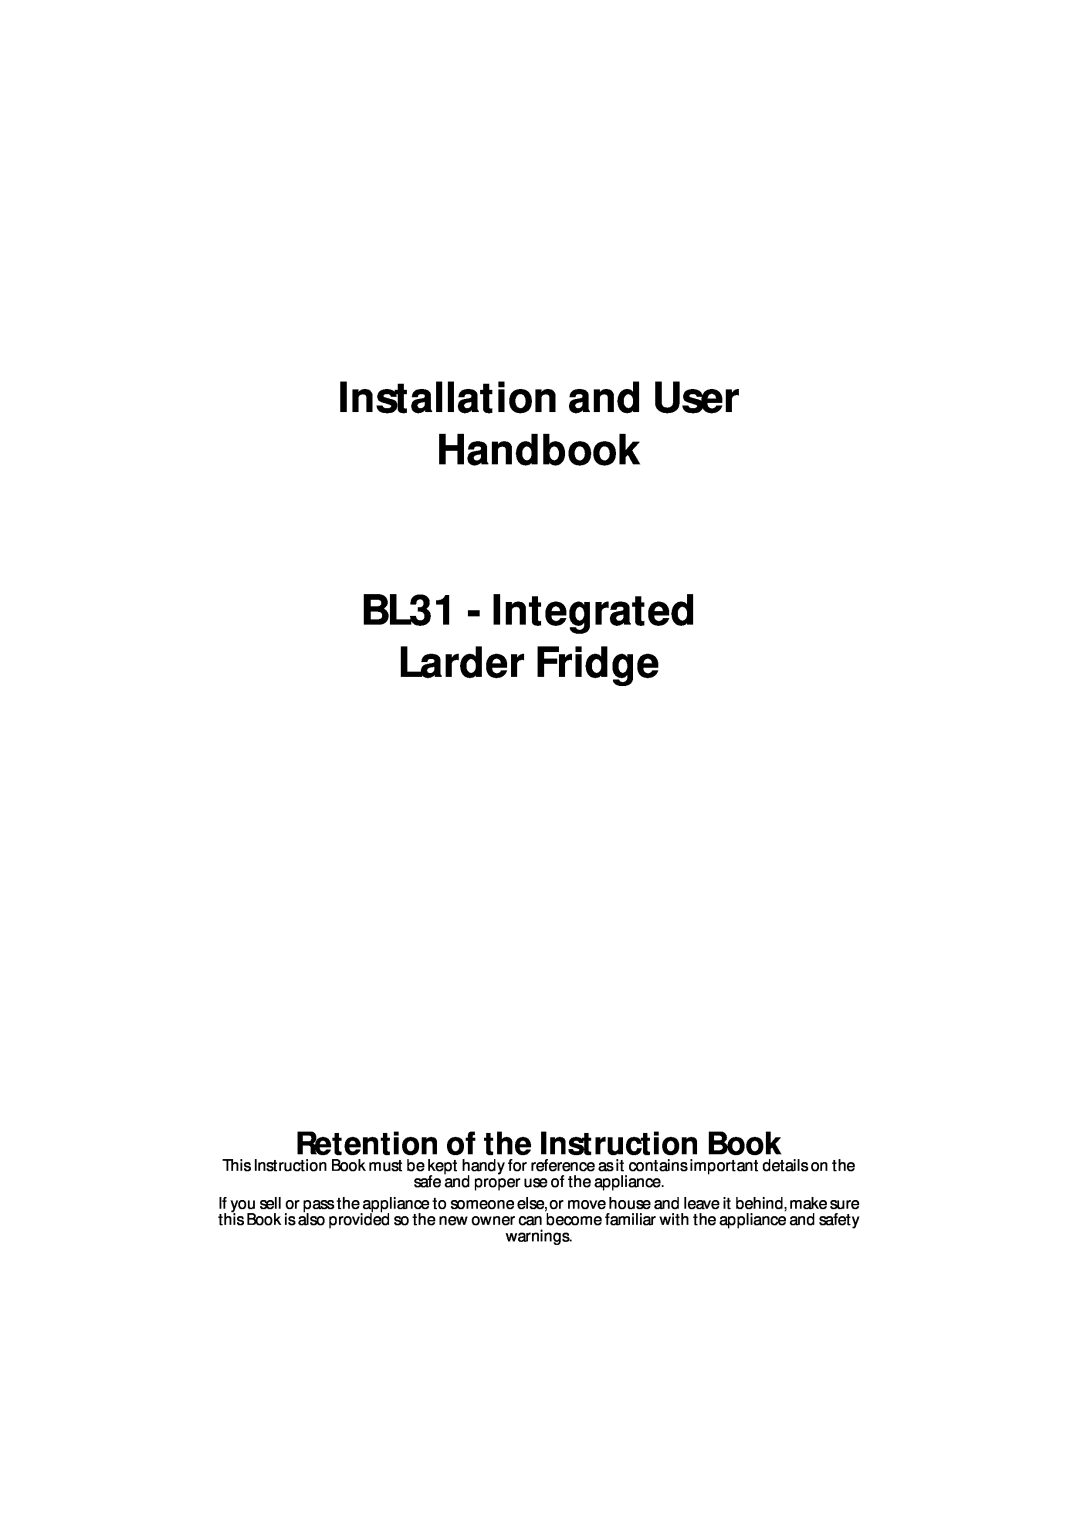 Hotpoint manual Retention of the Instruction Book, Installation and User Handbook BL31 - Integrated Larder Fridge 